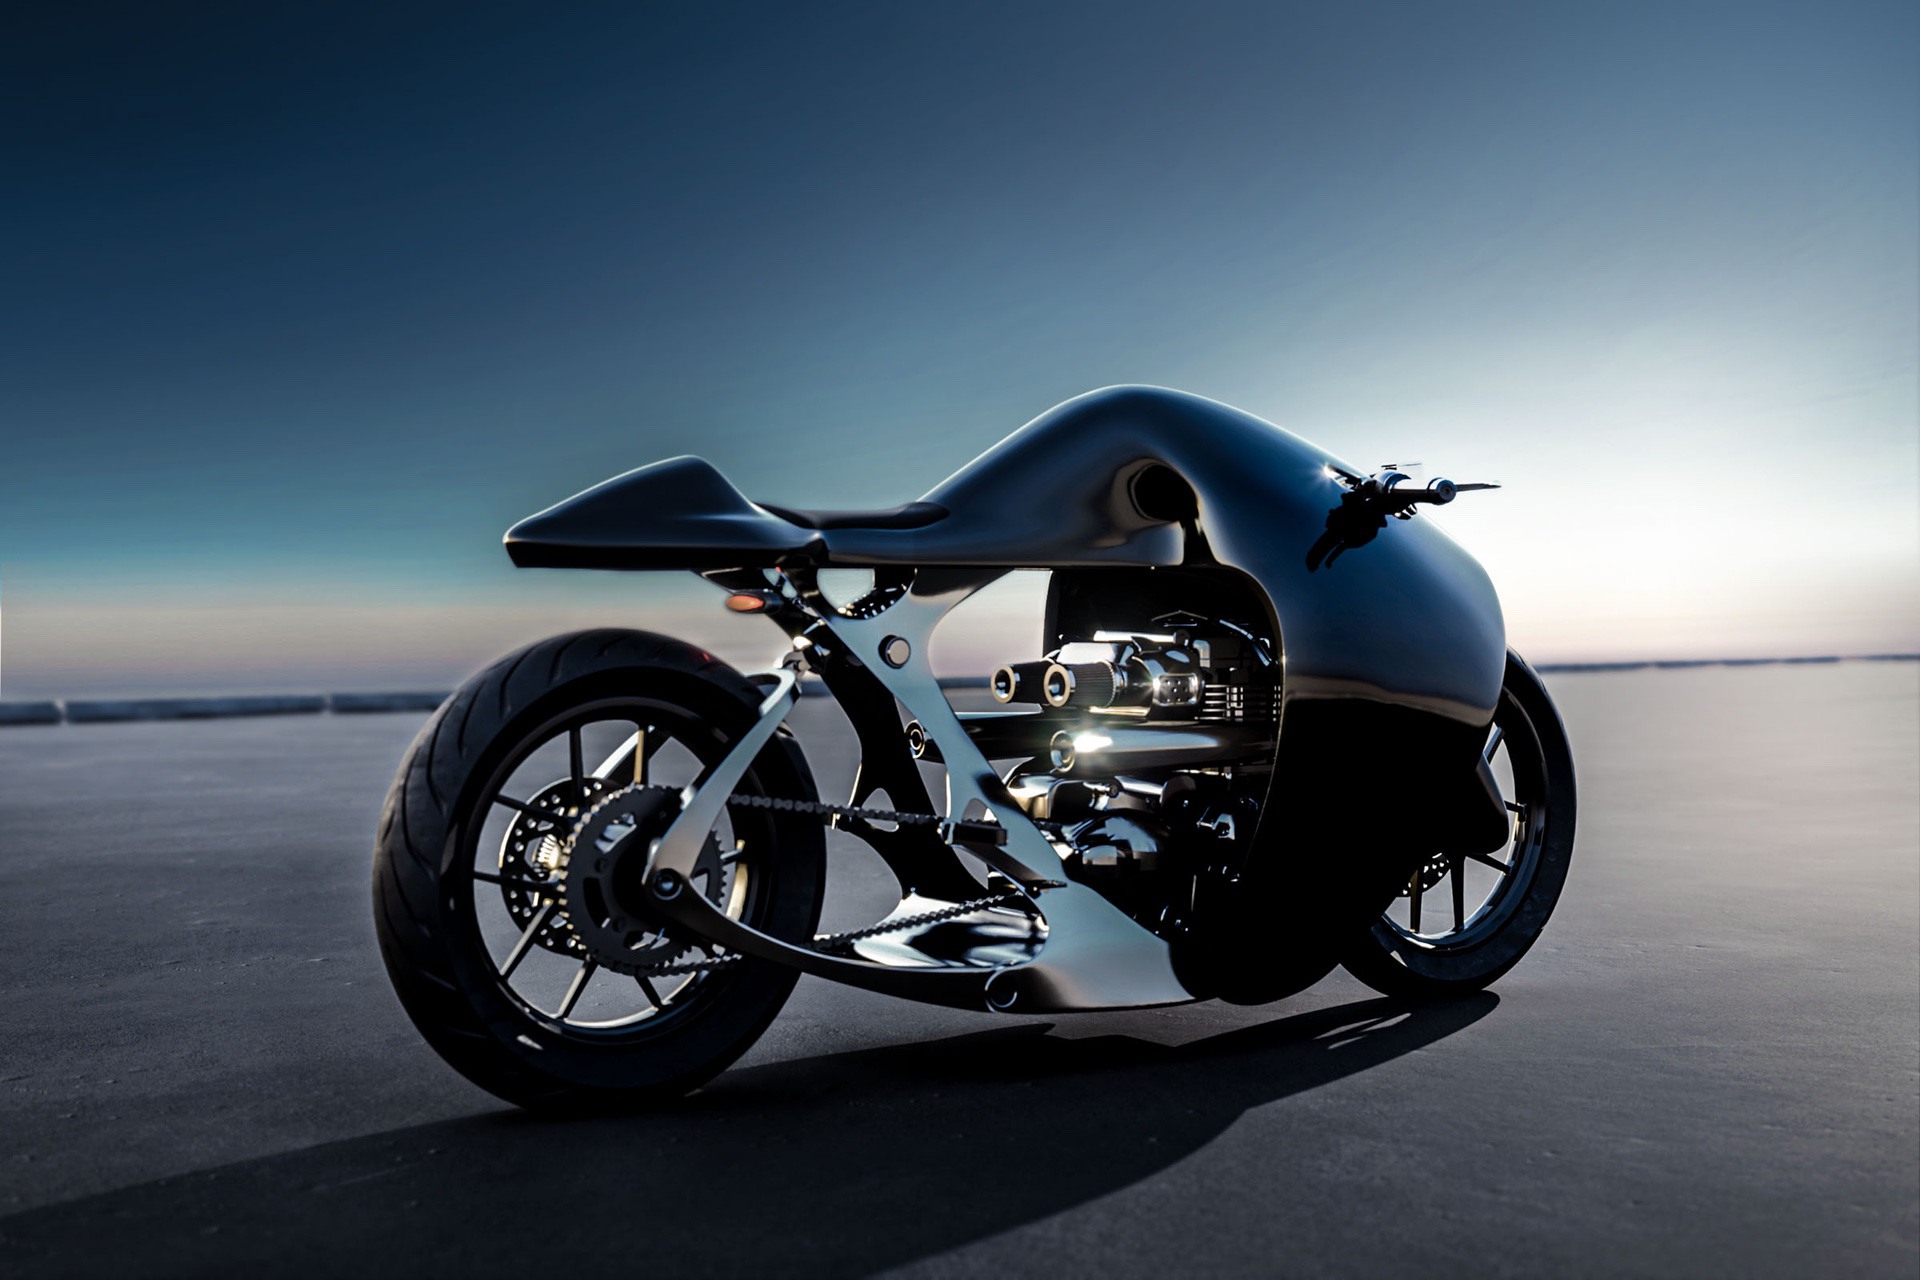 Bandit9 Supermarine Custom Racer motorcycle sitting on flats